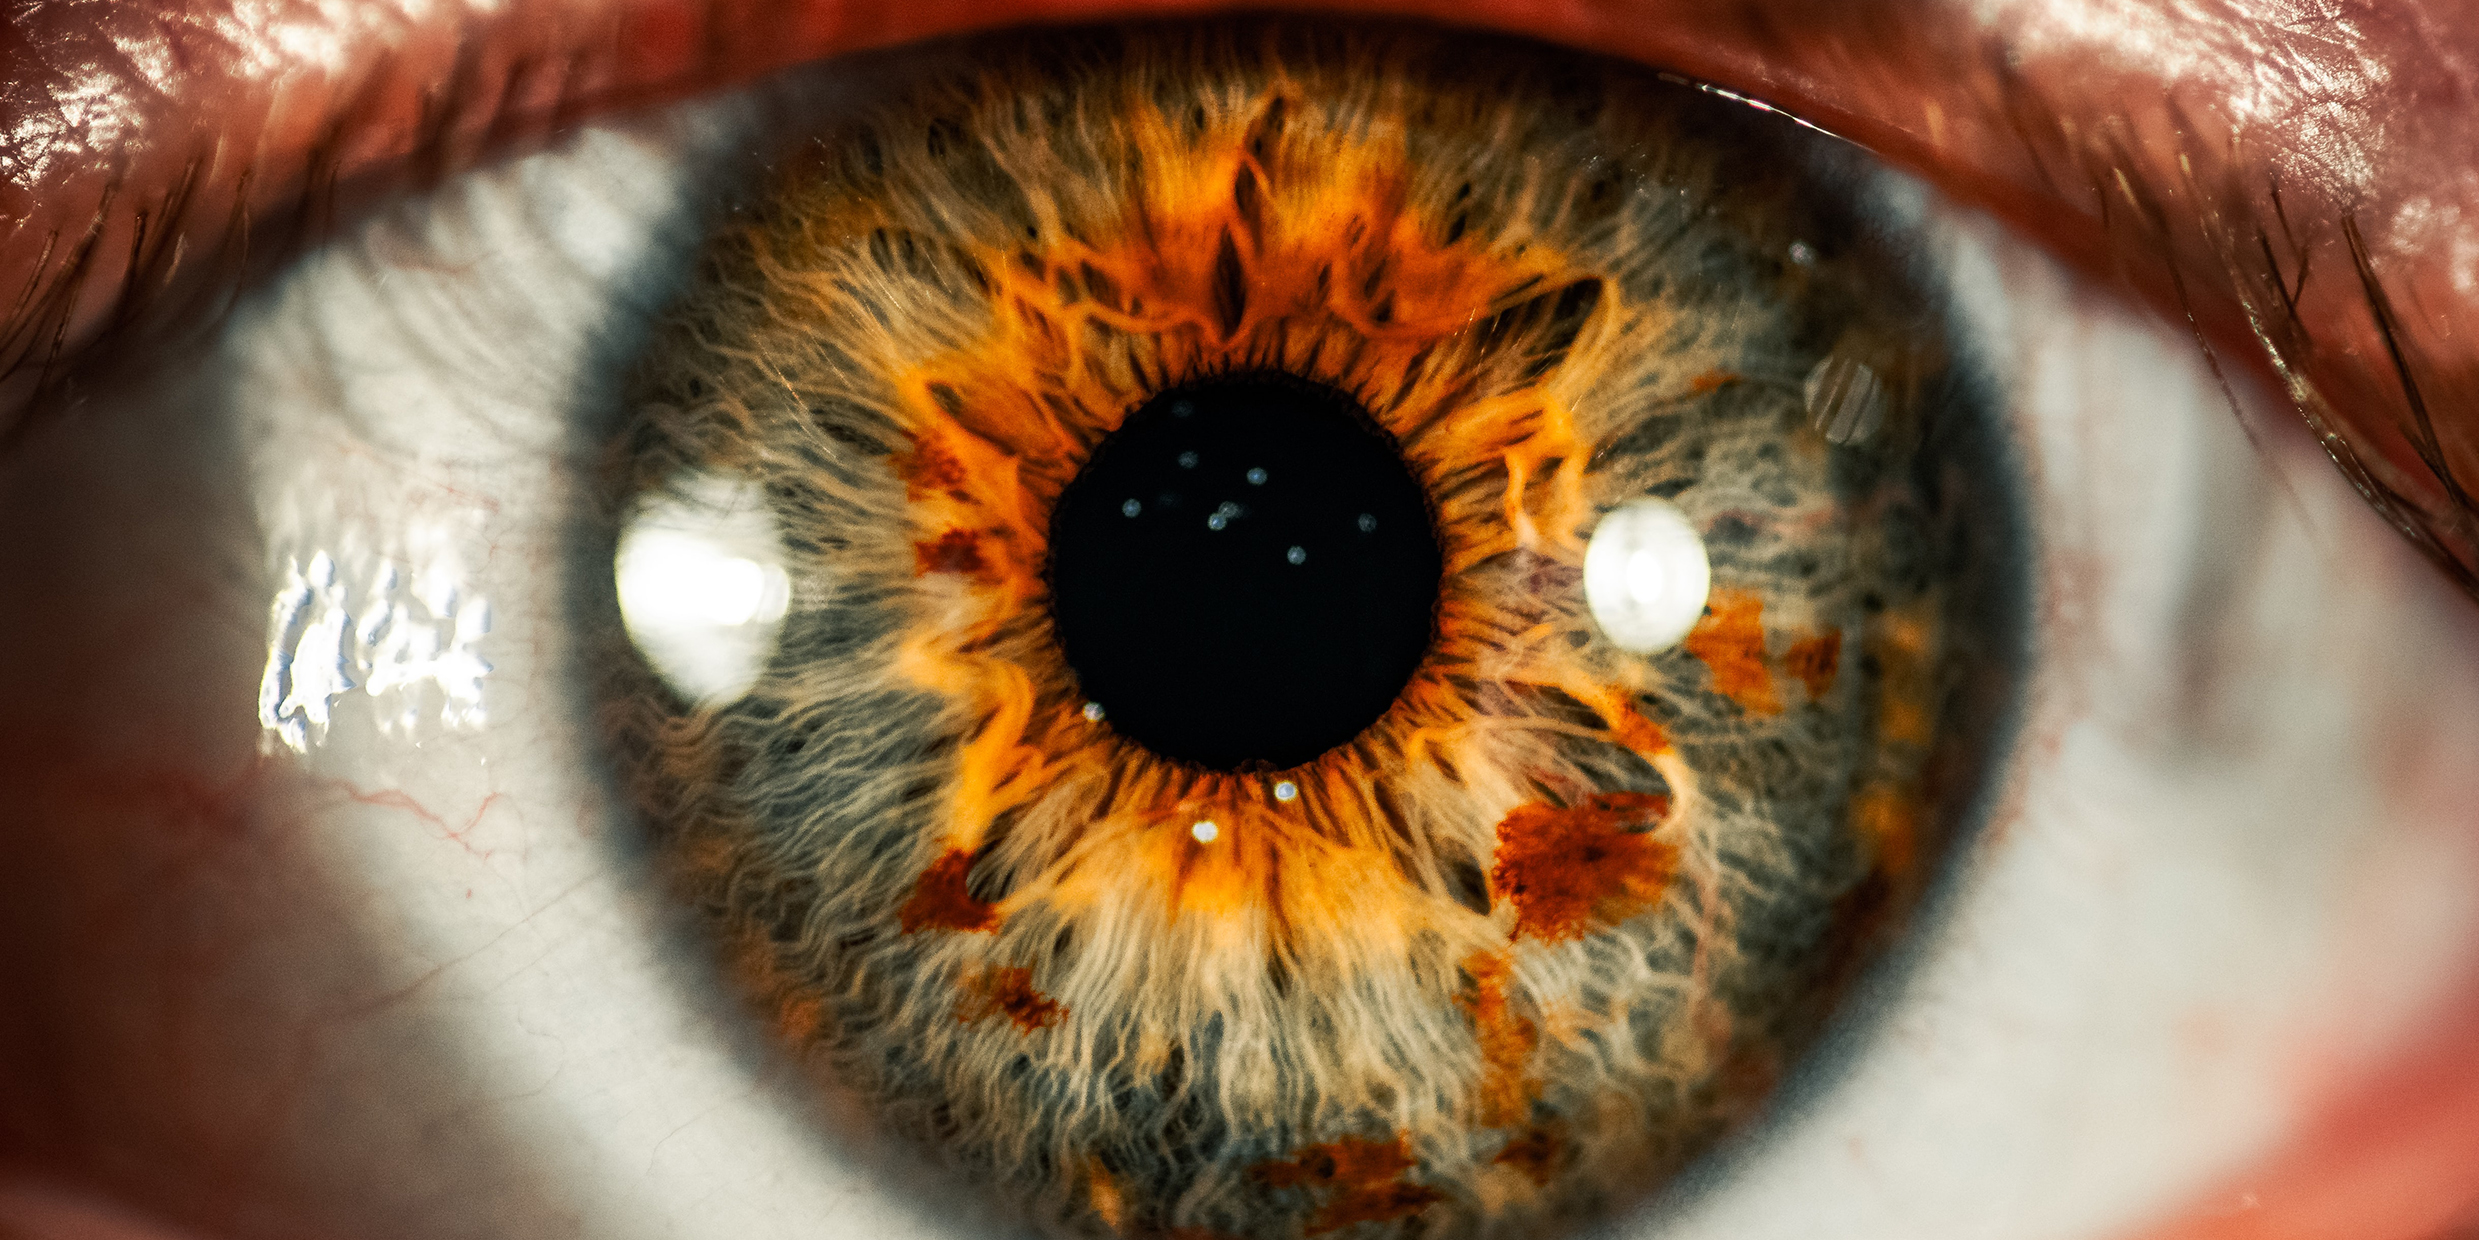 Extreme close up image of a human eye